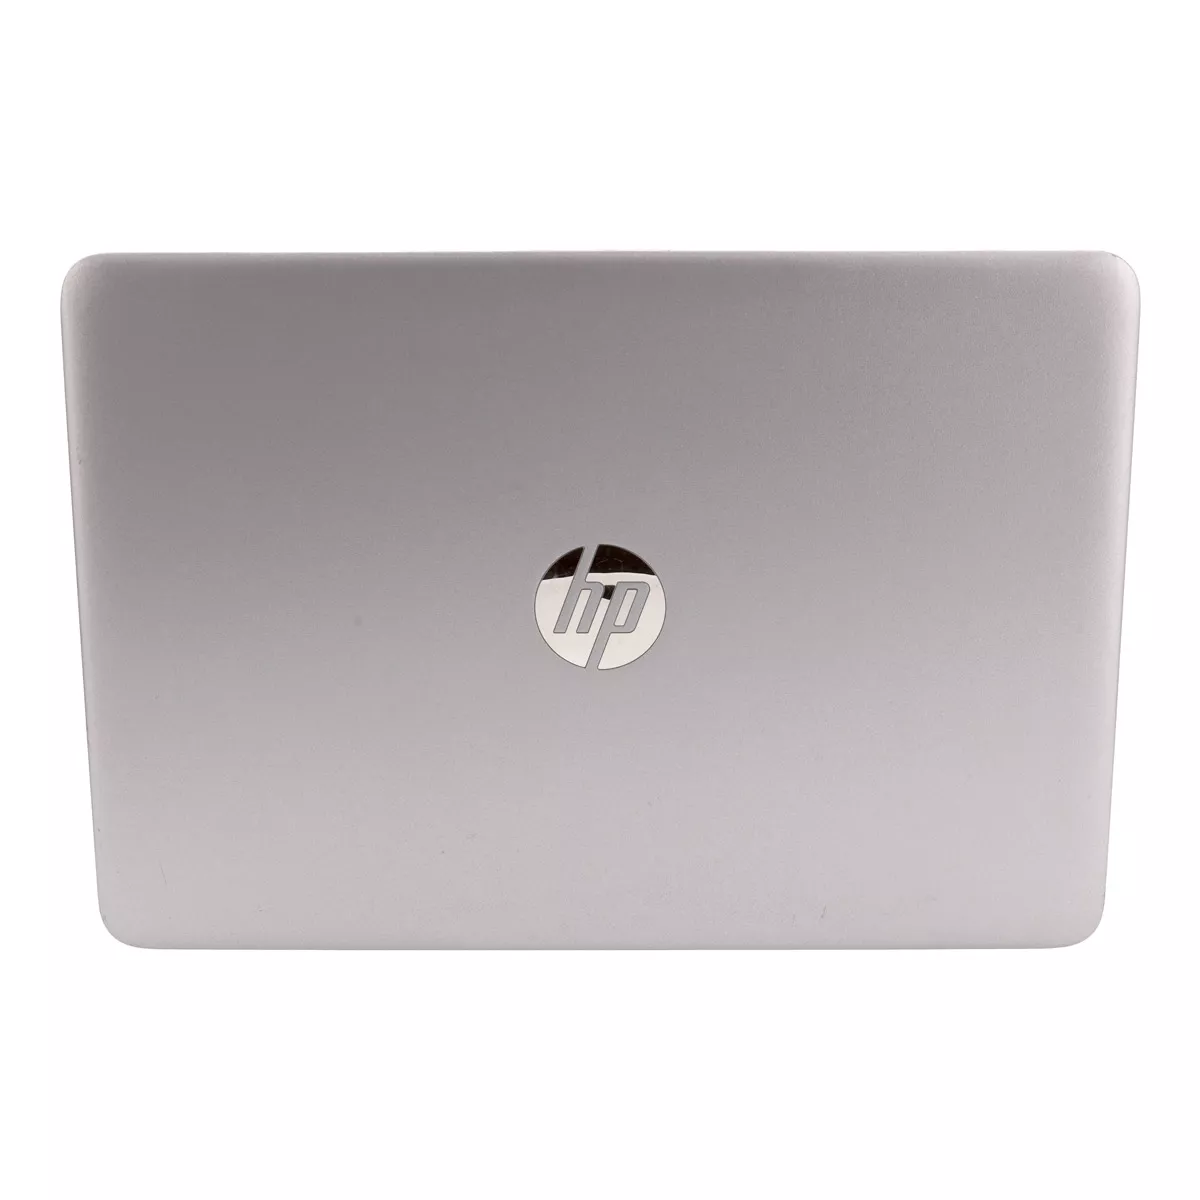 HP EliteBook 840 G4 Core i5 7300U Full-HD 240 GB M.2 SSD Webcam B